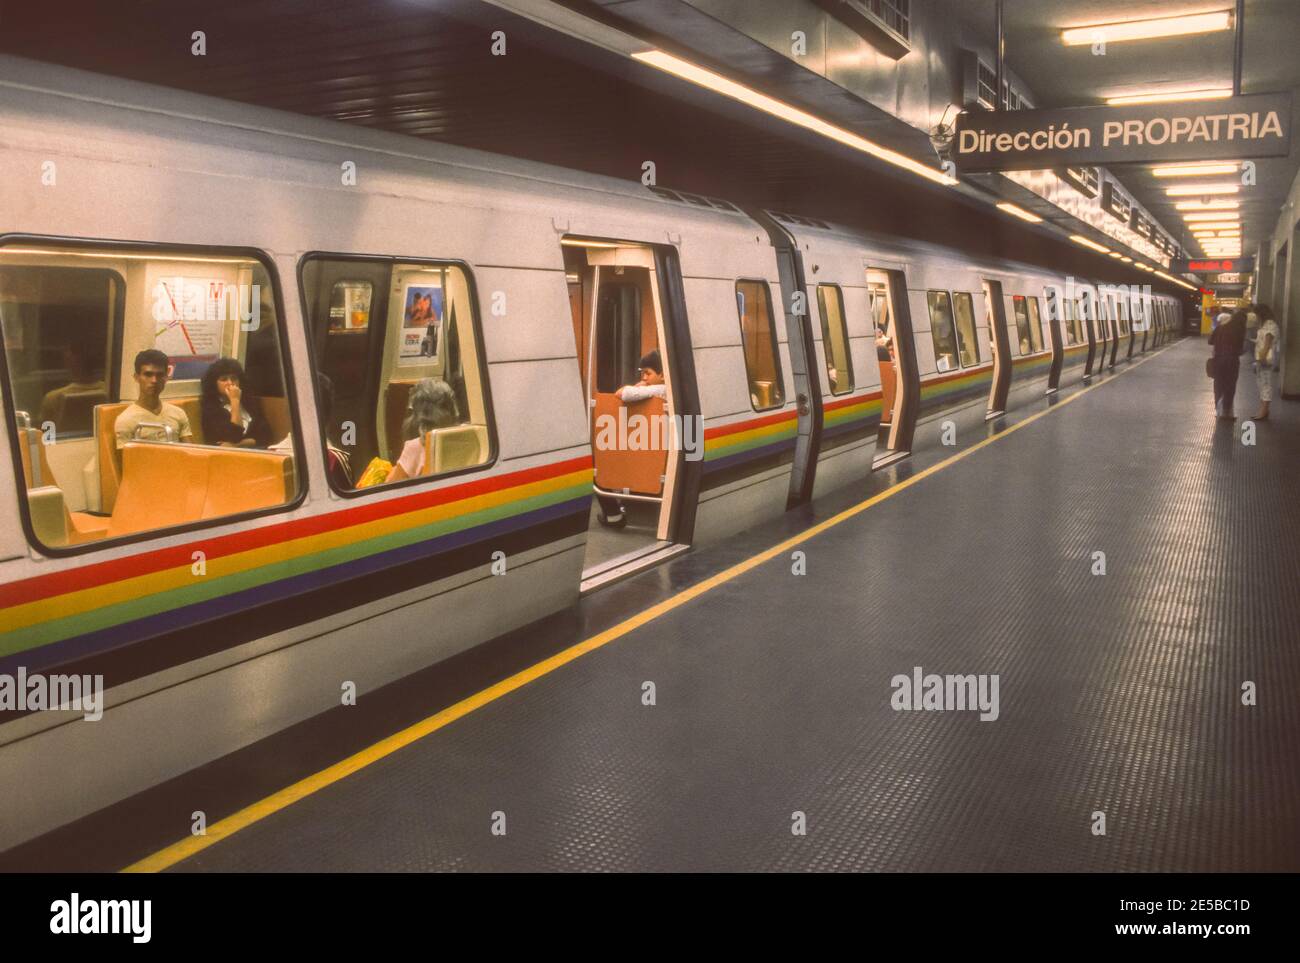 CARACAS, VENEZUELA, 1988 - Metro train platform and train cars with passengers. Stock Photo